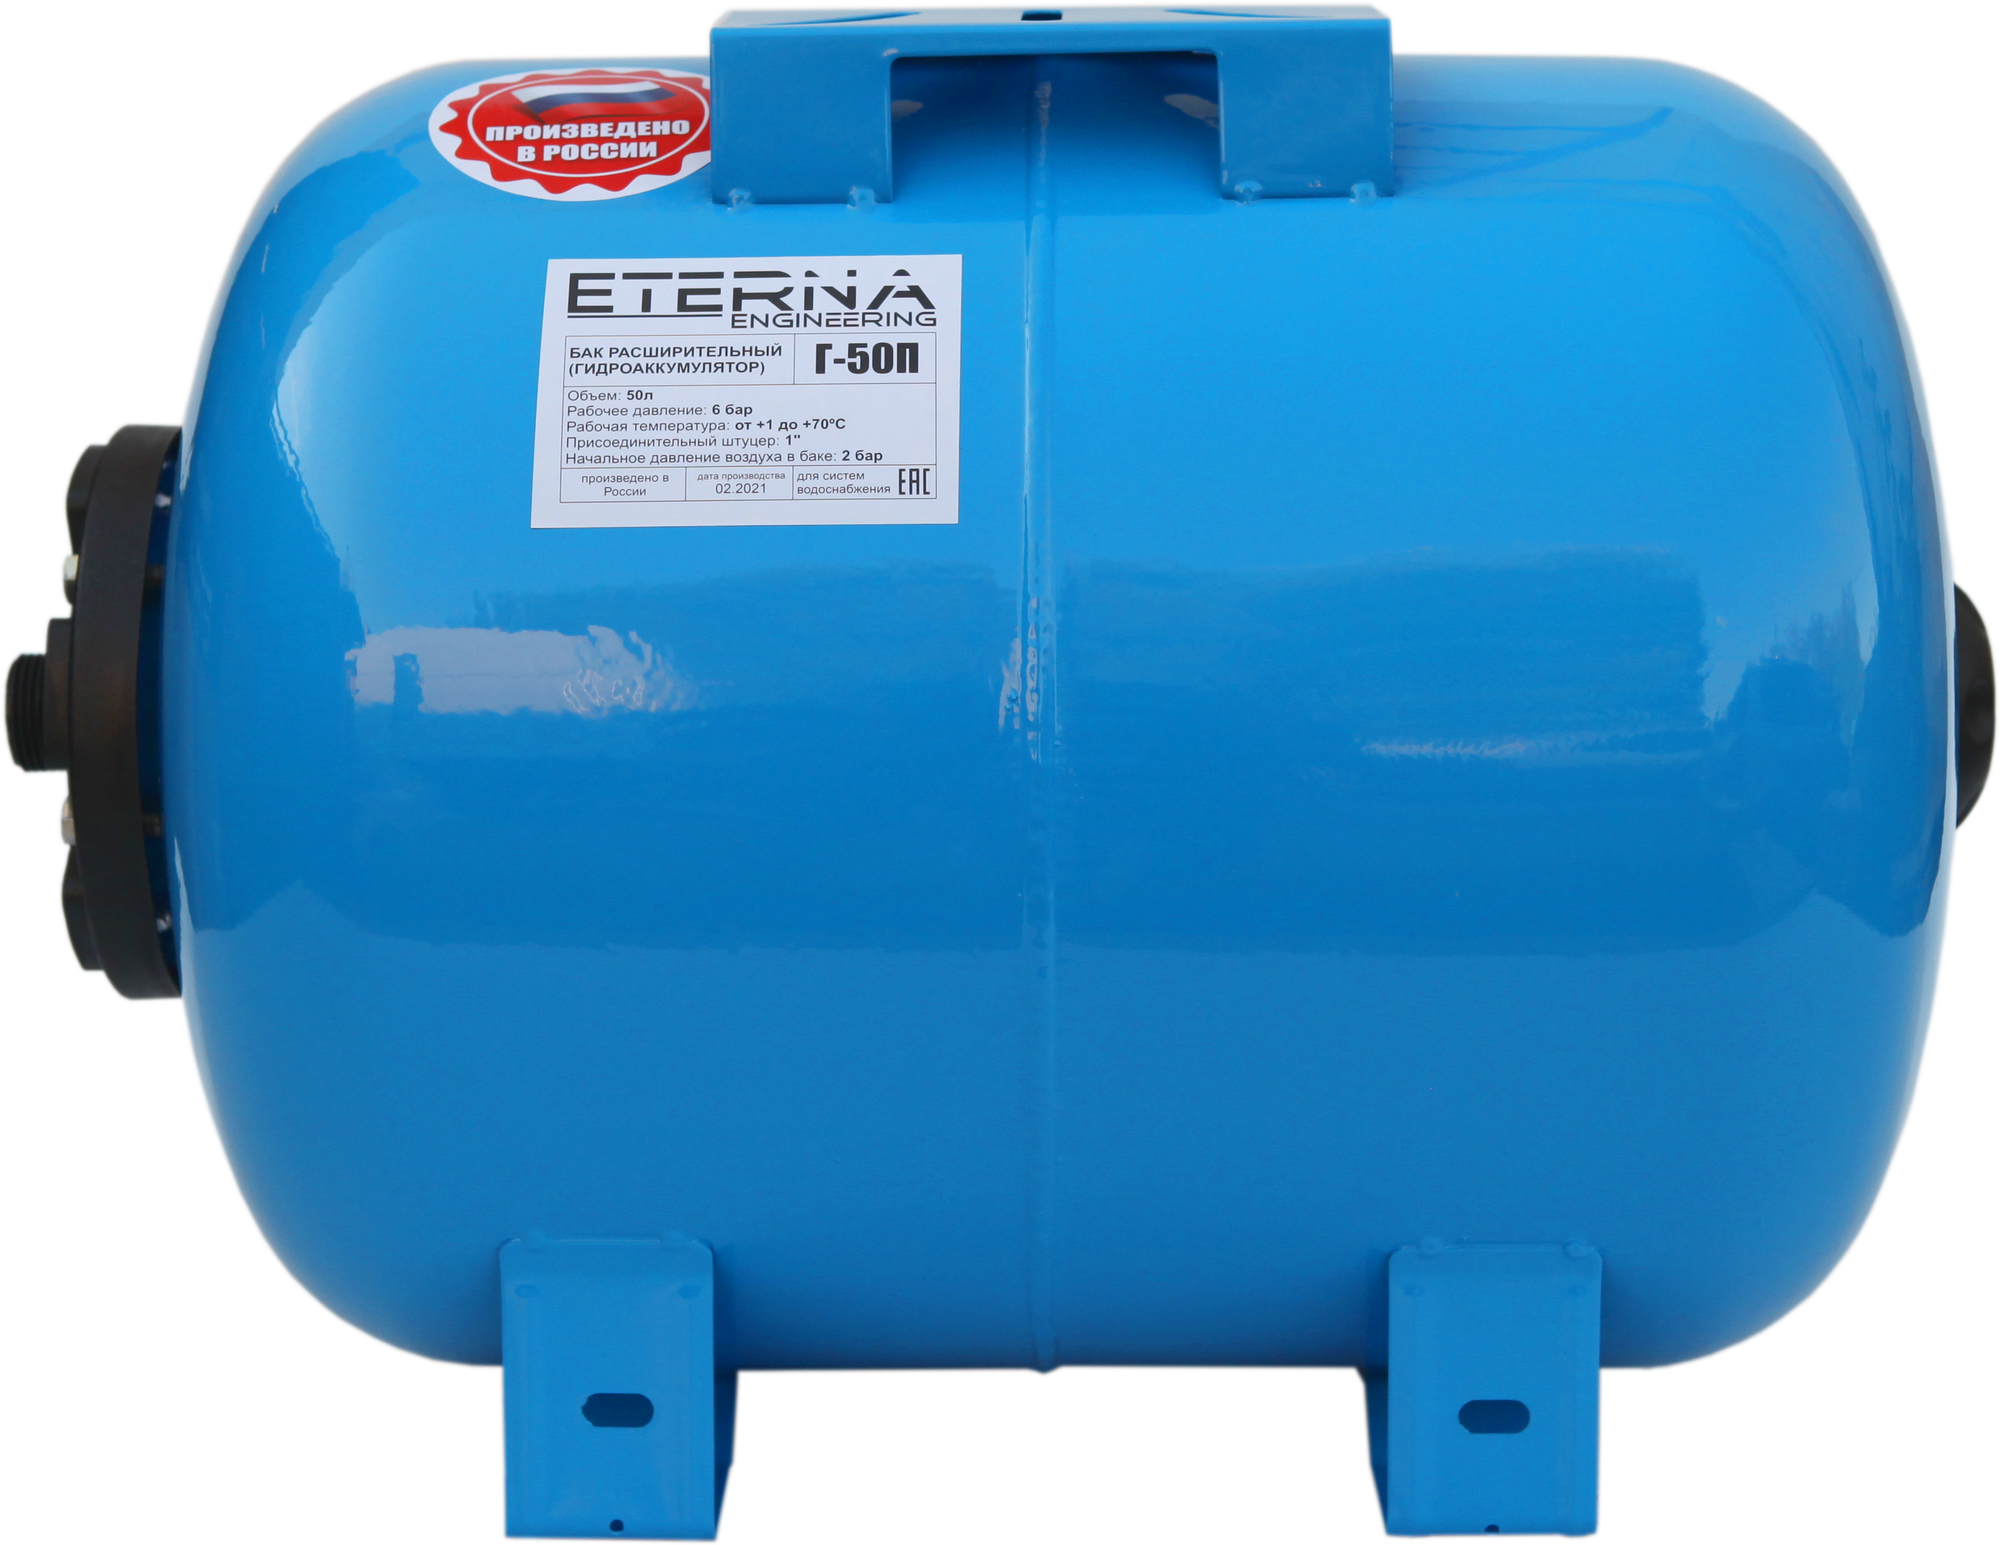 Гидроаккумулятор ETERNA Г-50П (50 л 1" горизонтальный пластик фланец)